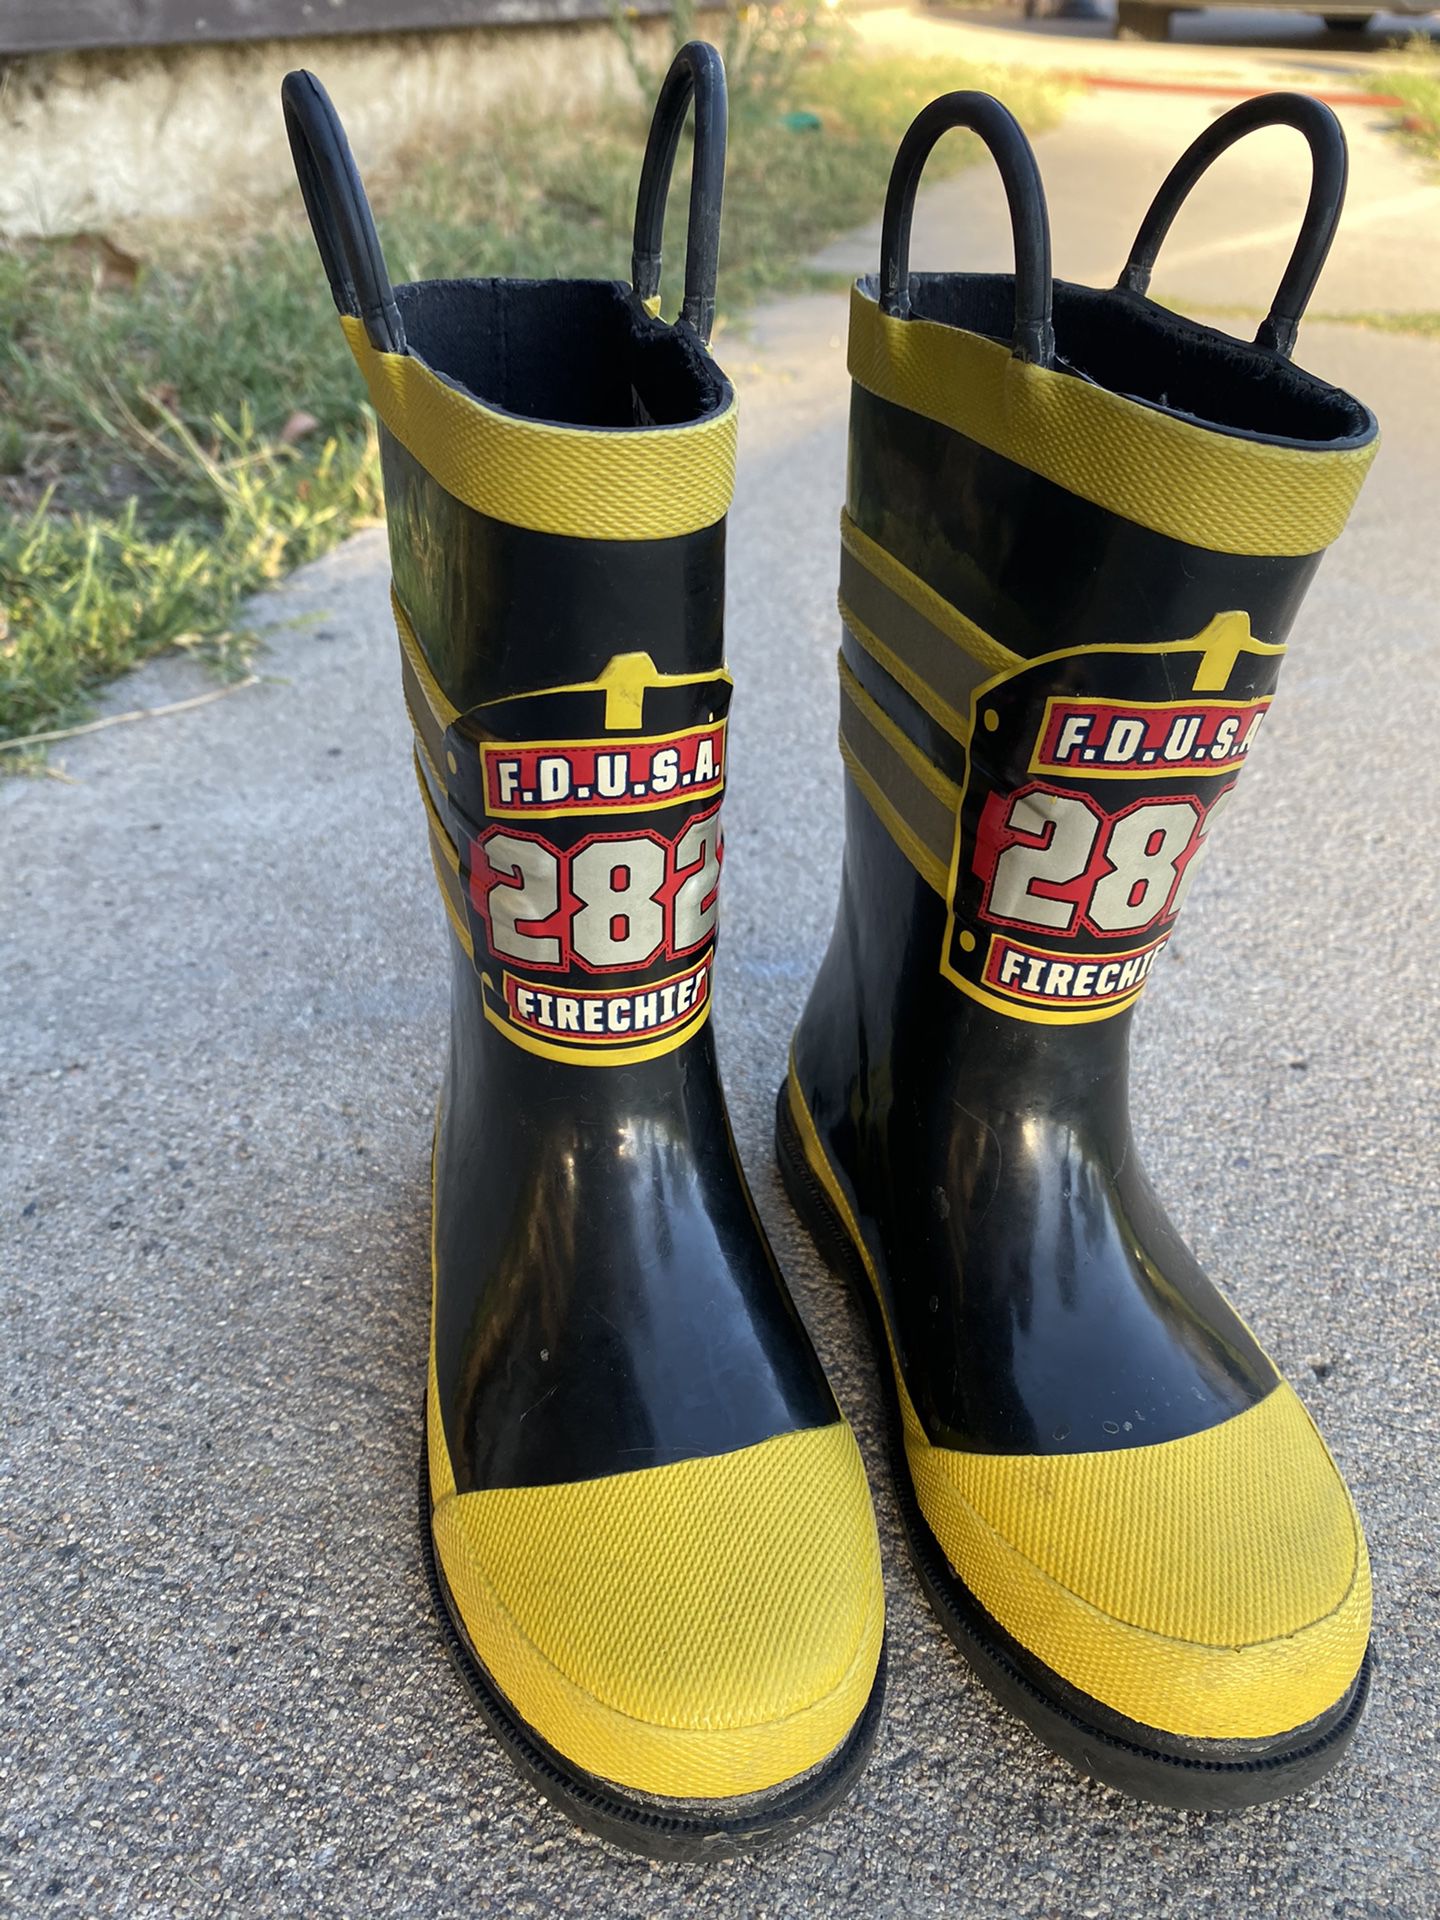 Western Chief kids size 11 rain boots